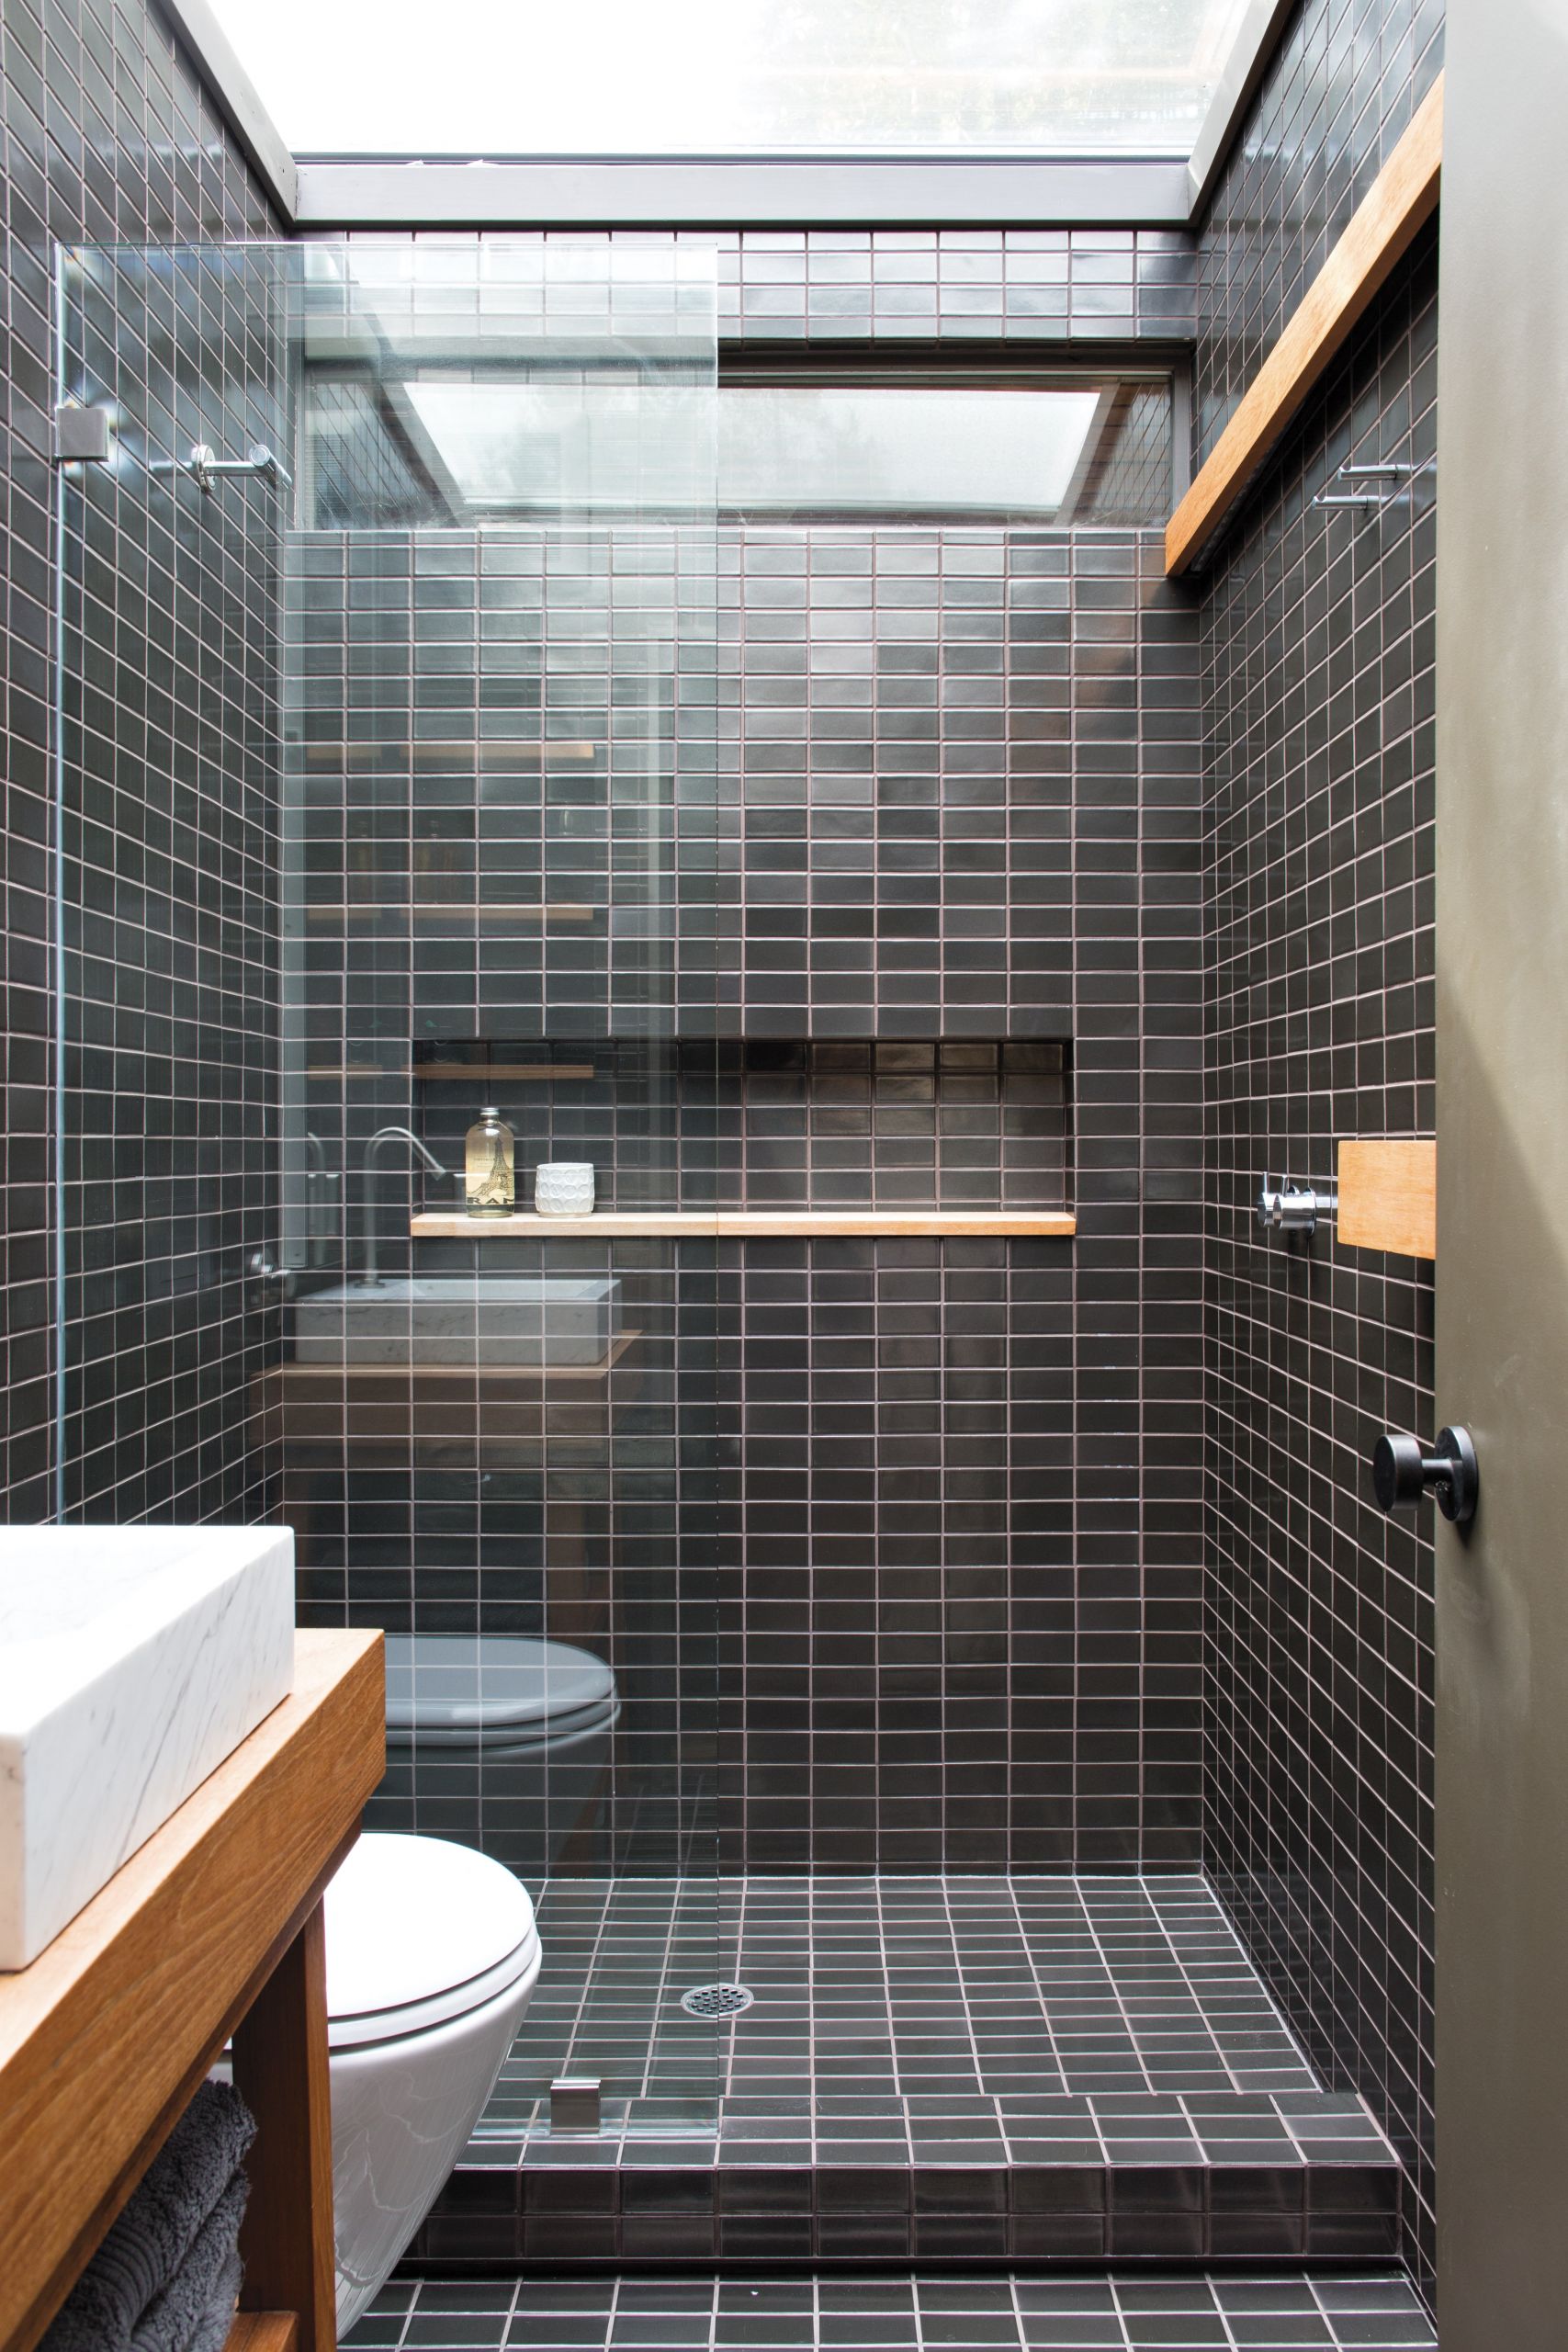 Bathroom Ceramic Tile Ideas
 How to Create the Bathroom Tile Design of Your Dreams